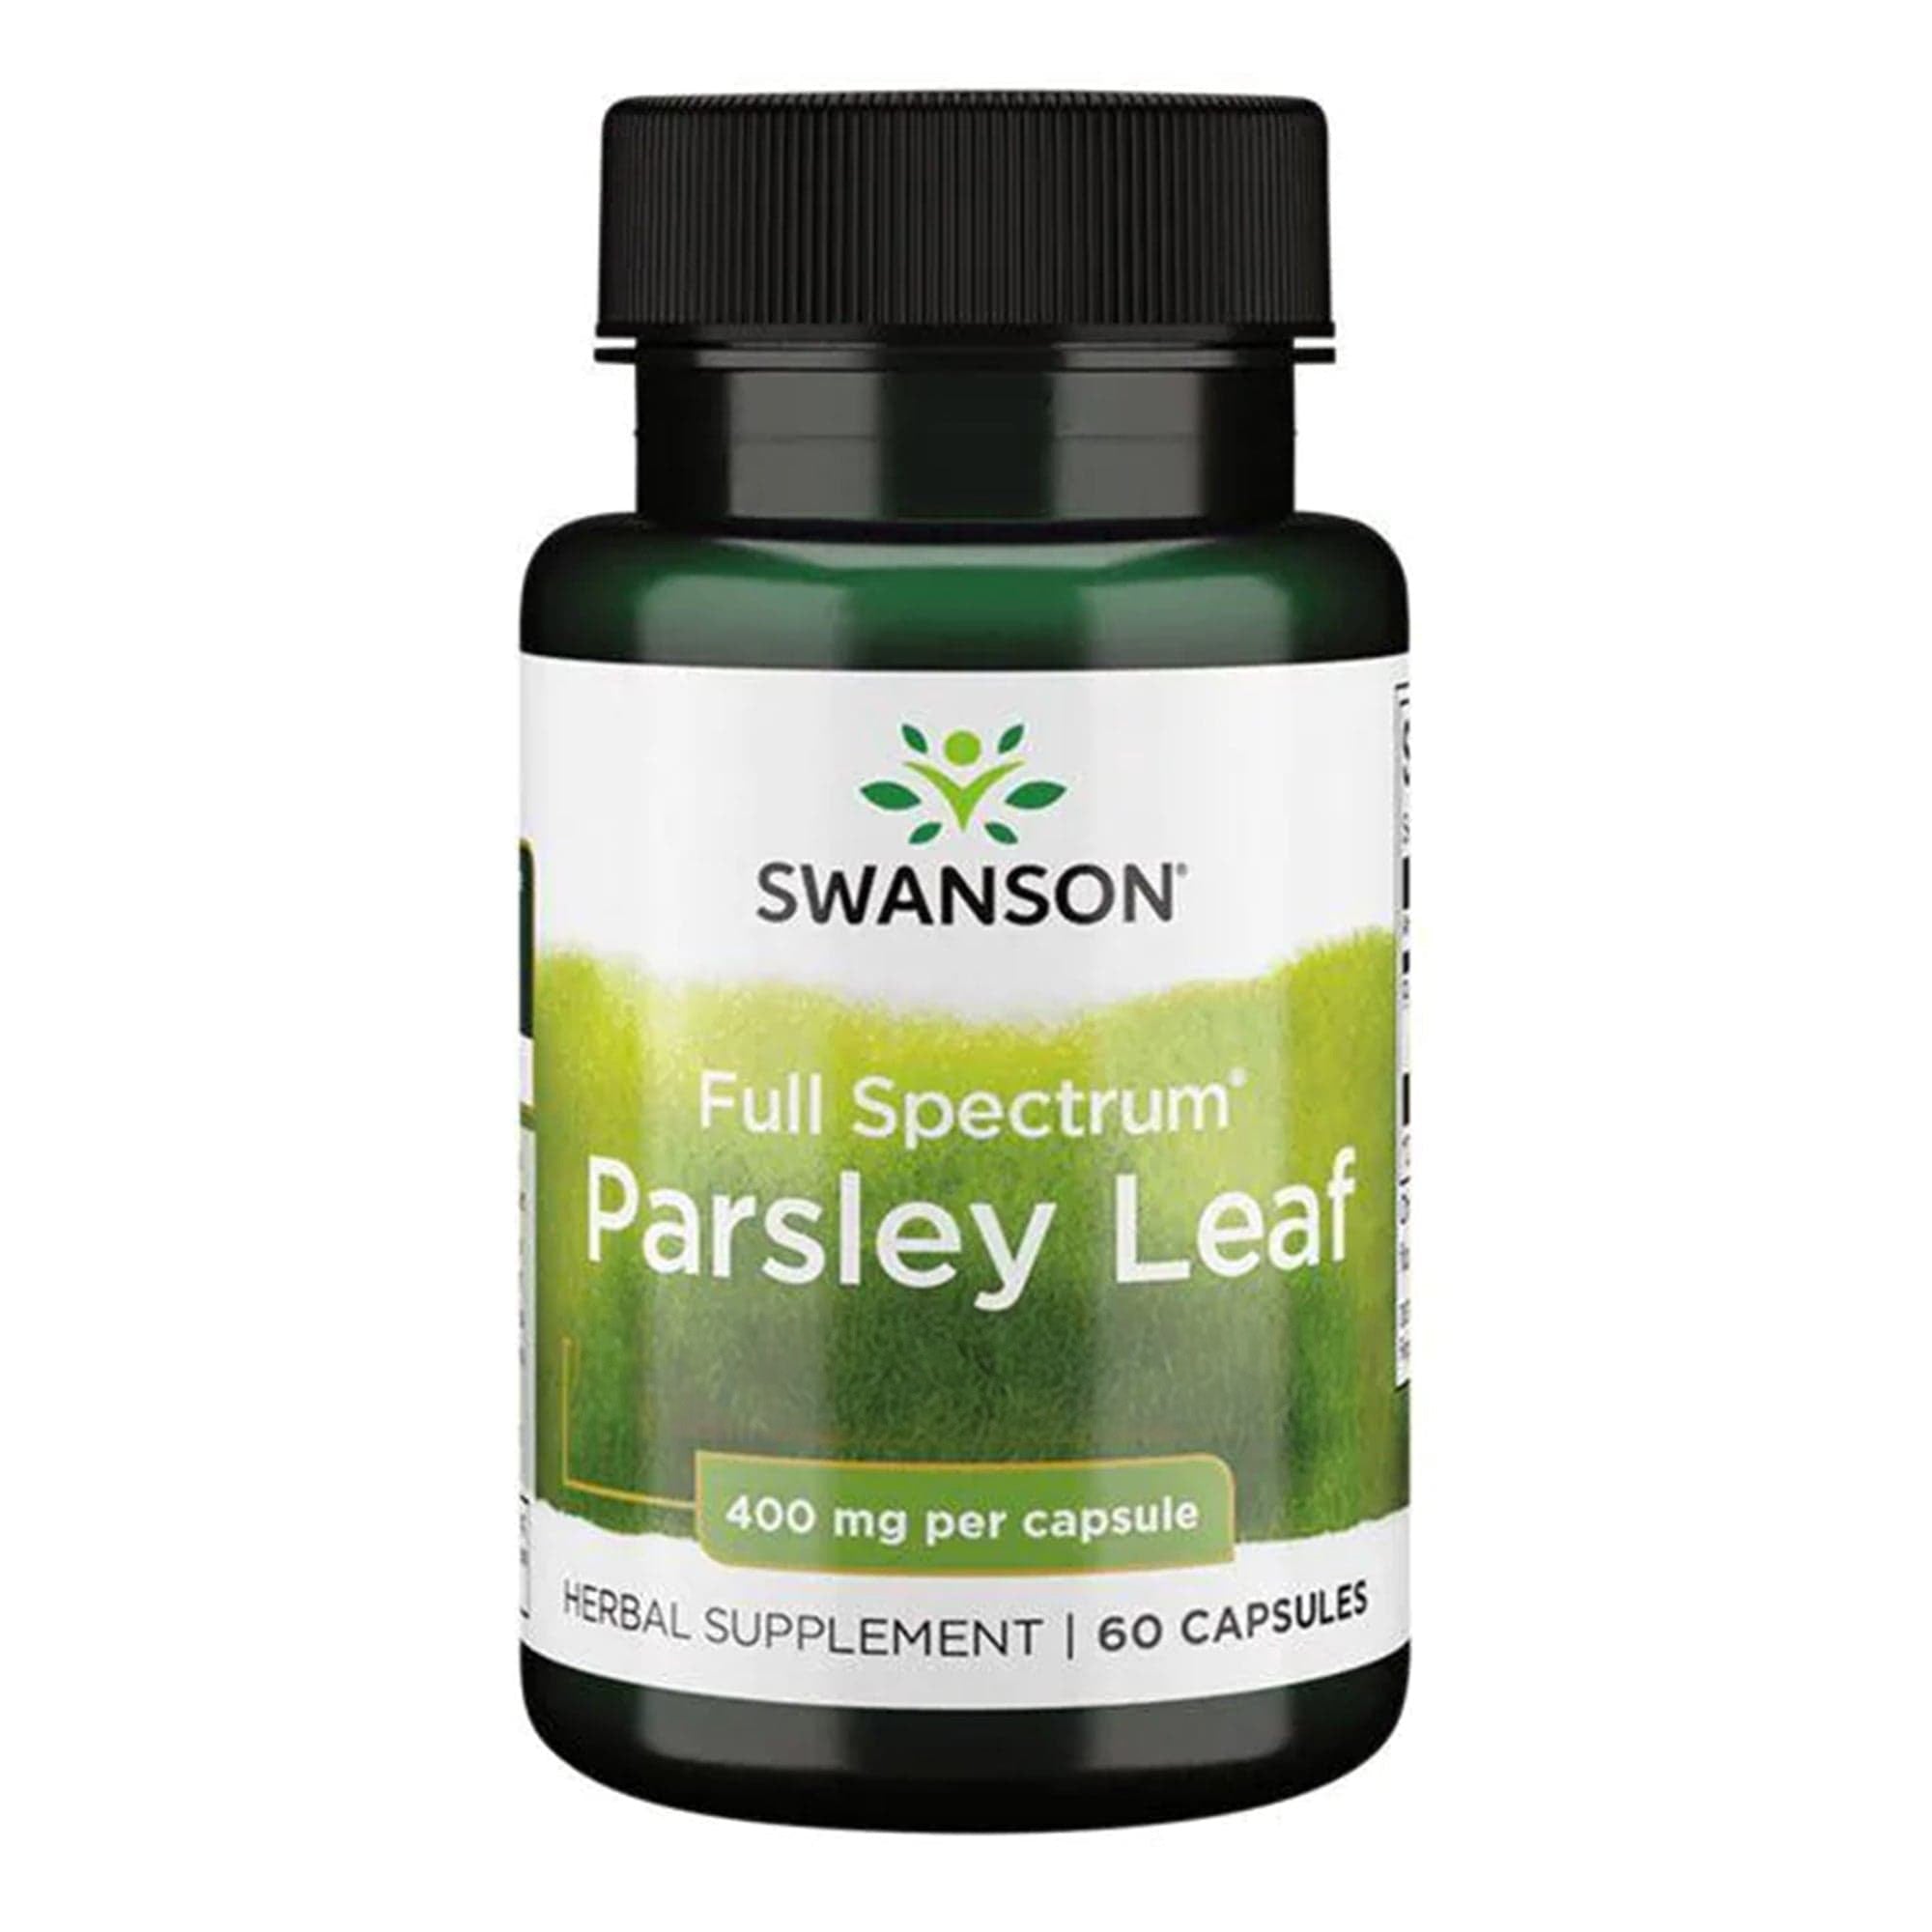 Peterseliebladextract | Parsley leaf | Kruidensupplement ter bevordering van de spijsvertering | 60 capsules | Swanson